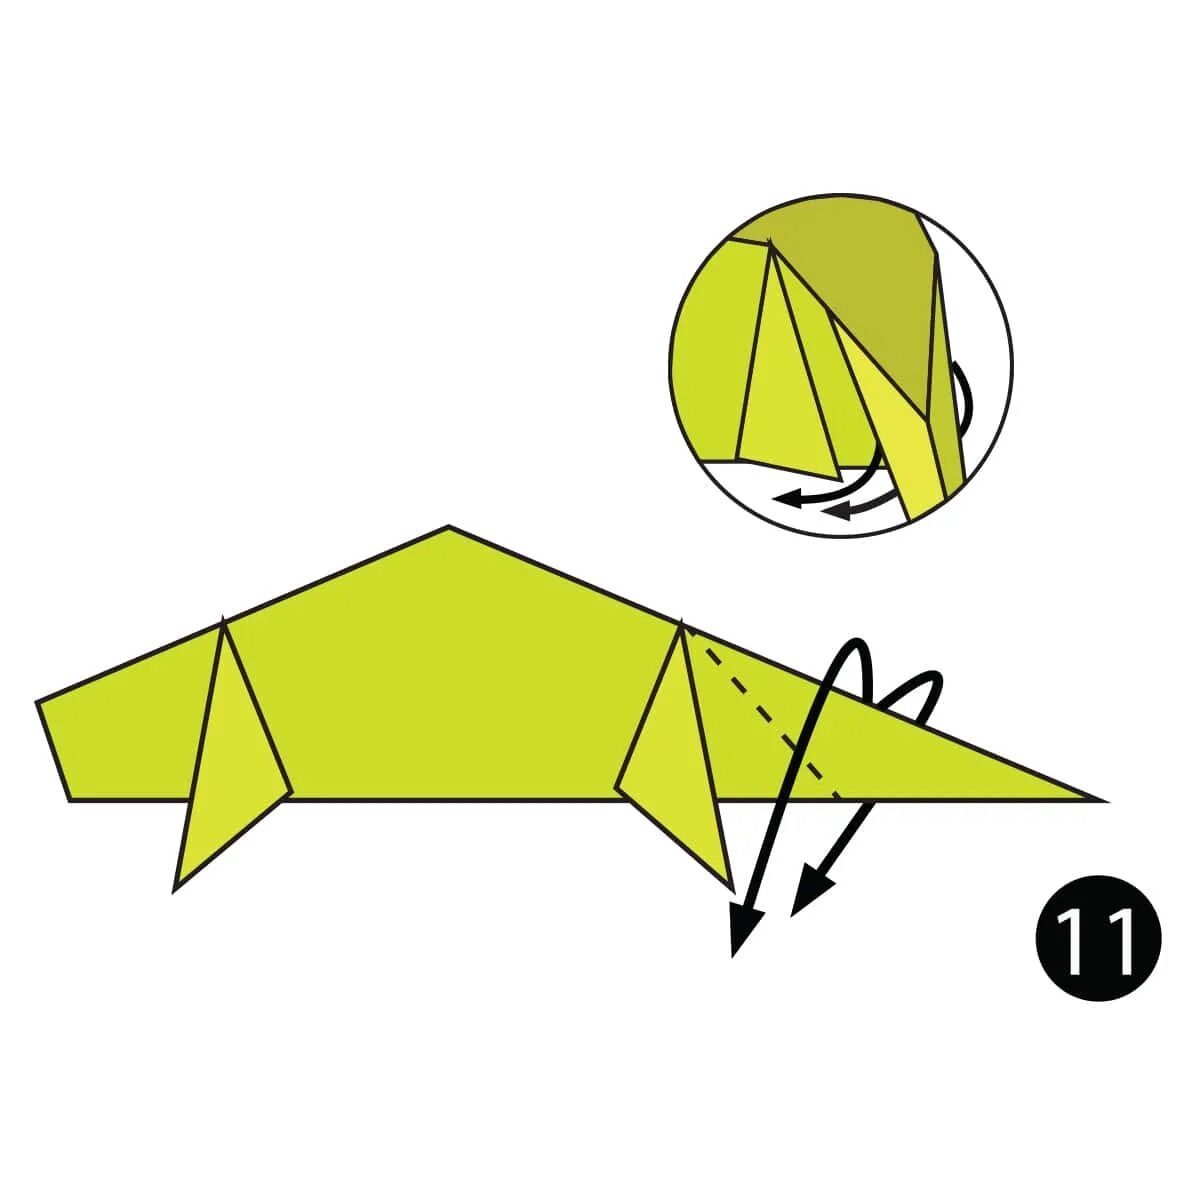 Хамелеон оригами для детей. Поделка хамелеон из бумаги. Оригами хамелеон схема. Аппликация хамелеон из бумаги.